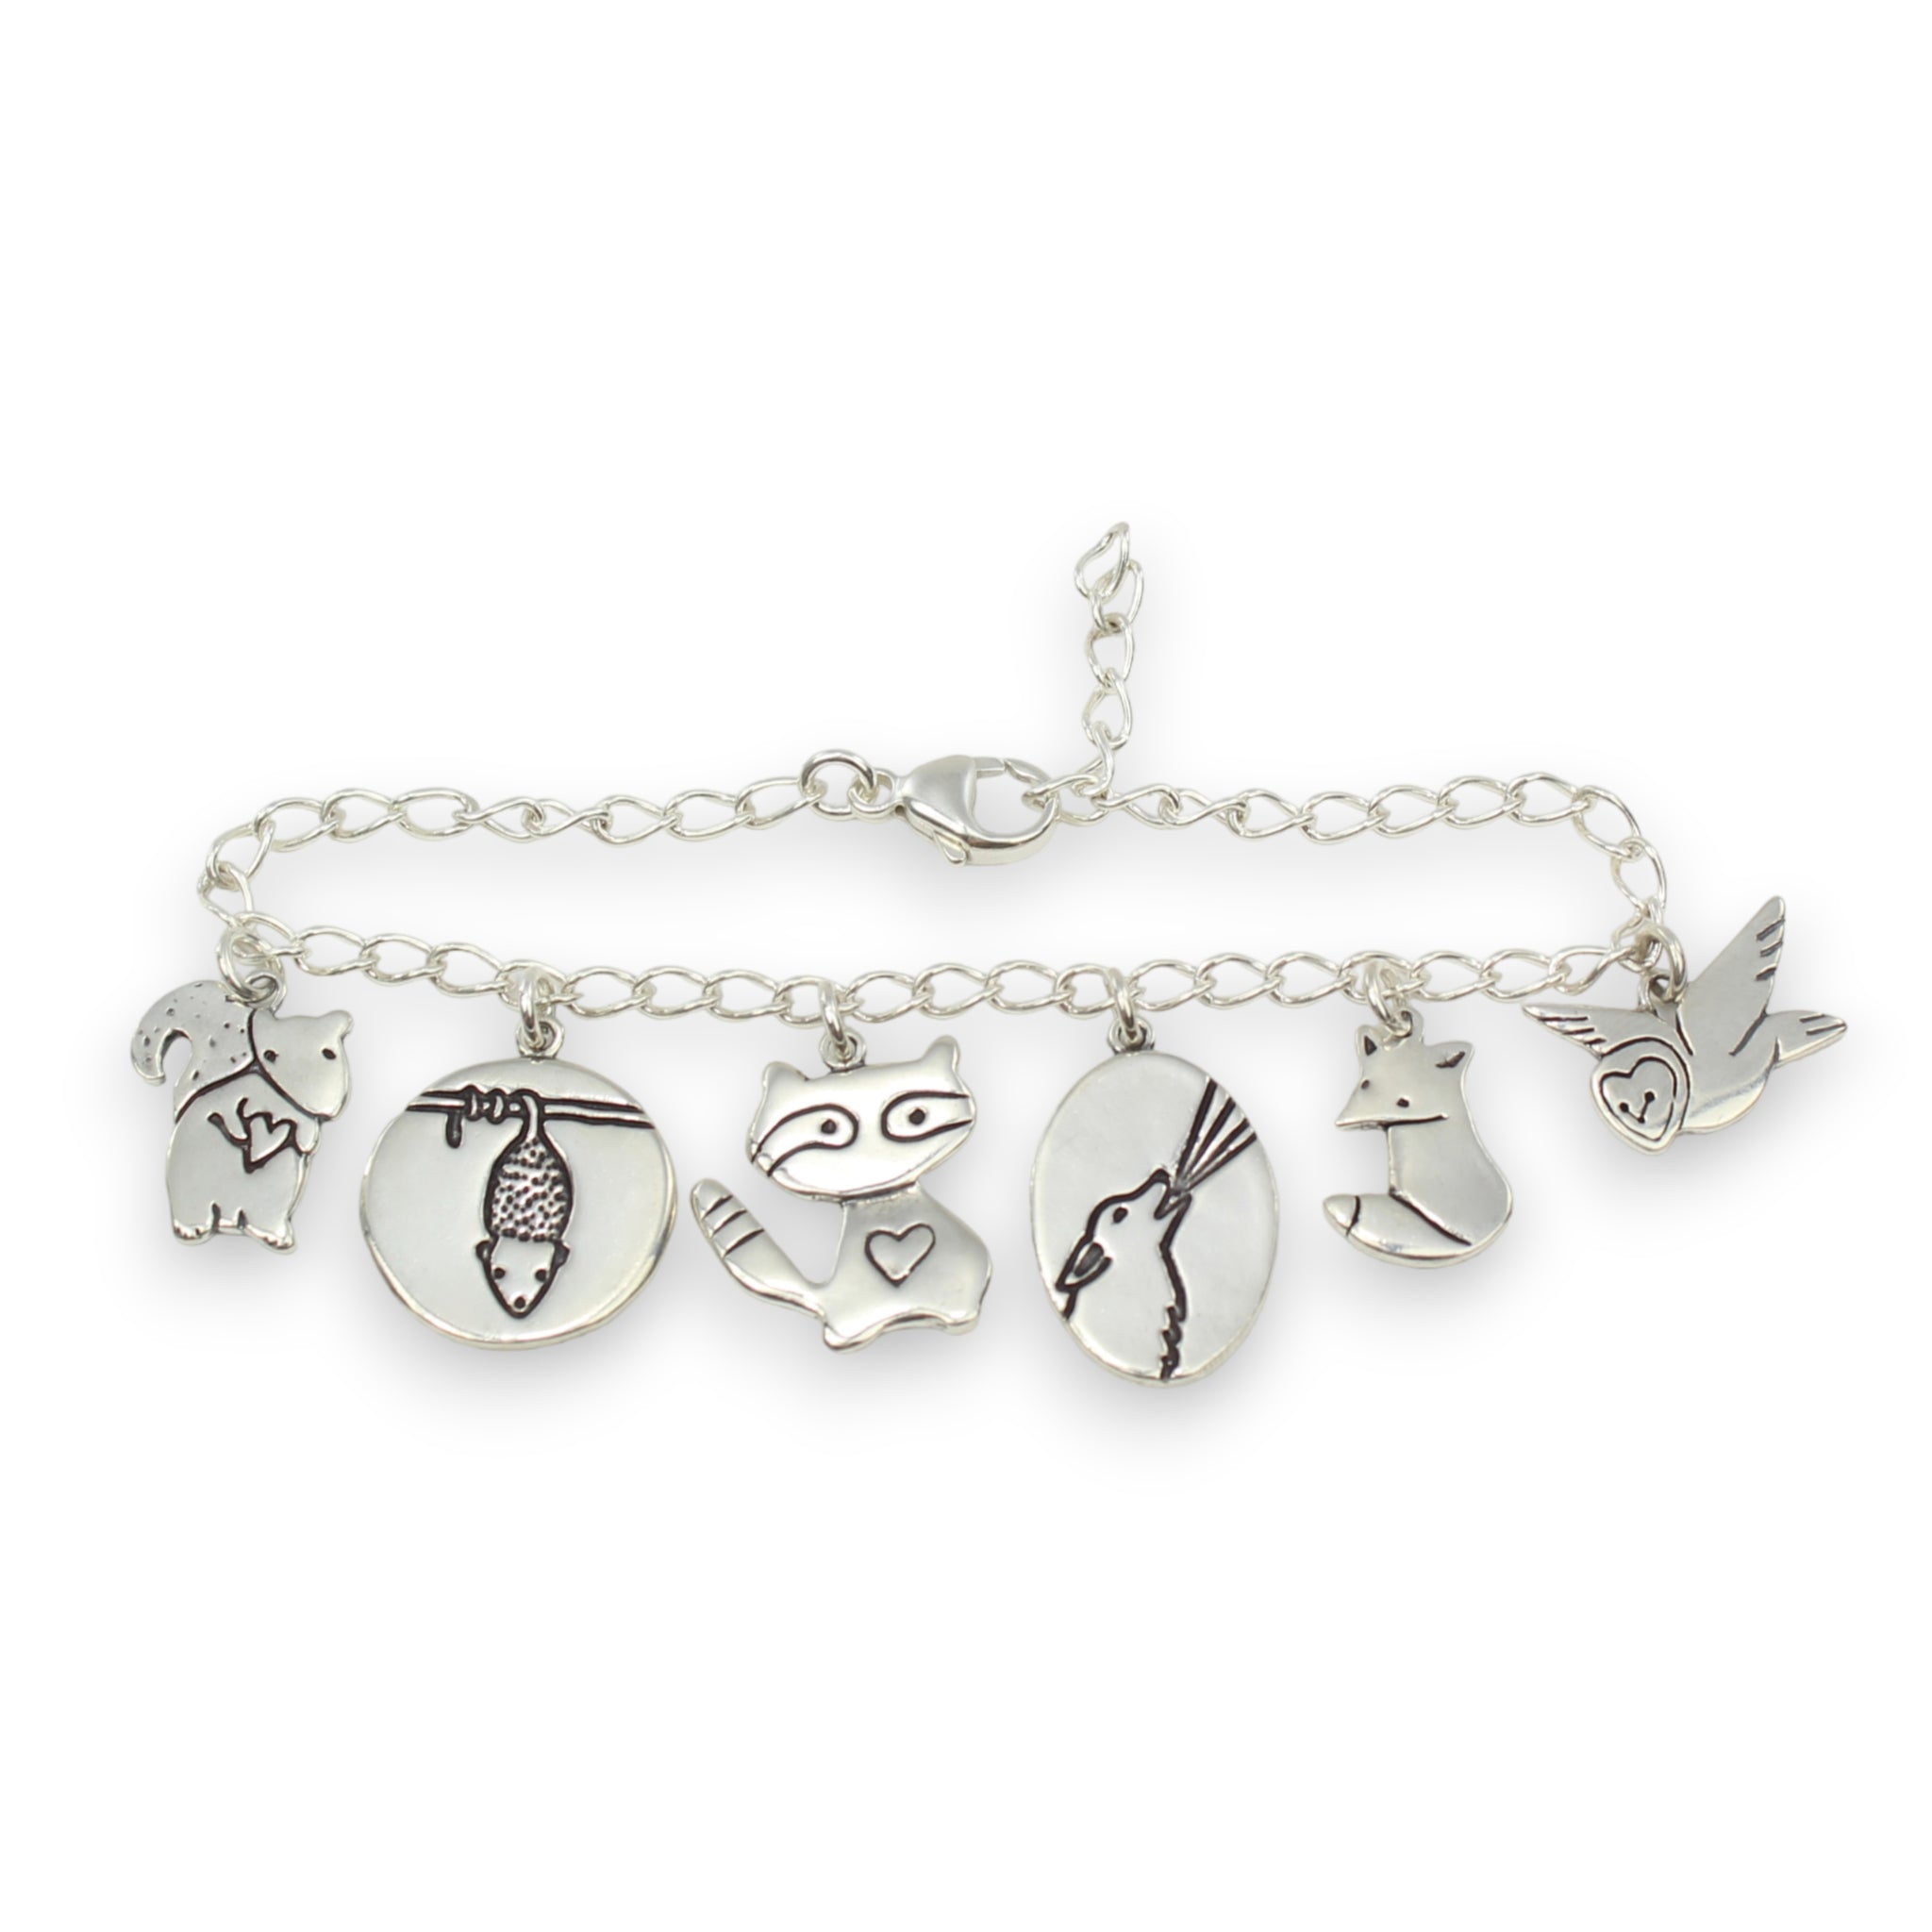 Personalised Animal Charm Bracelets